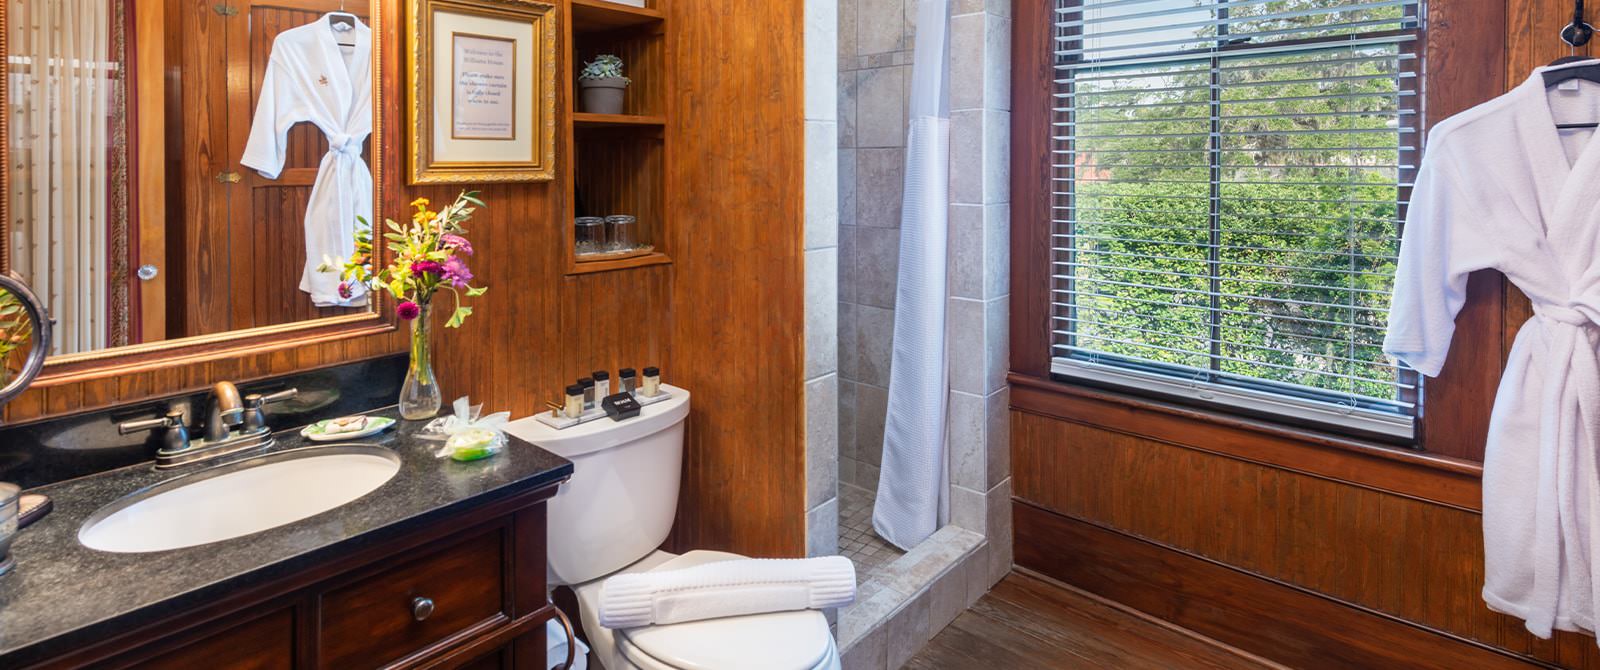 Bathroom with wooden paneling, hardwood flooring, tiled stand up shower, and dark wooden vanity